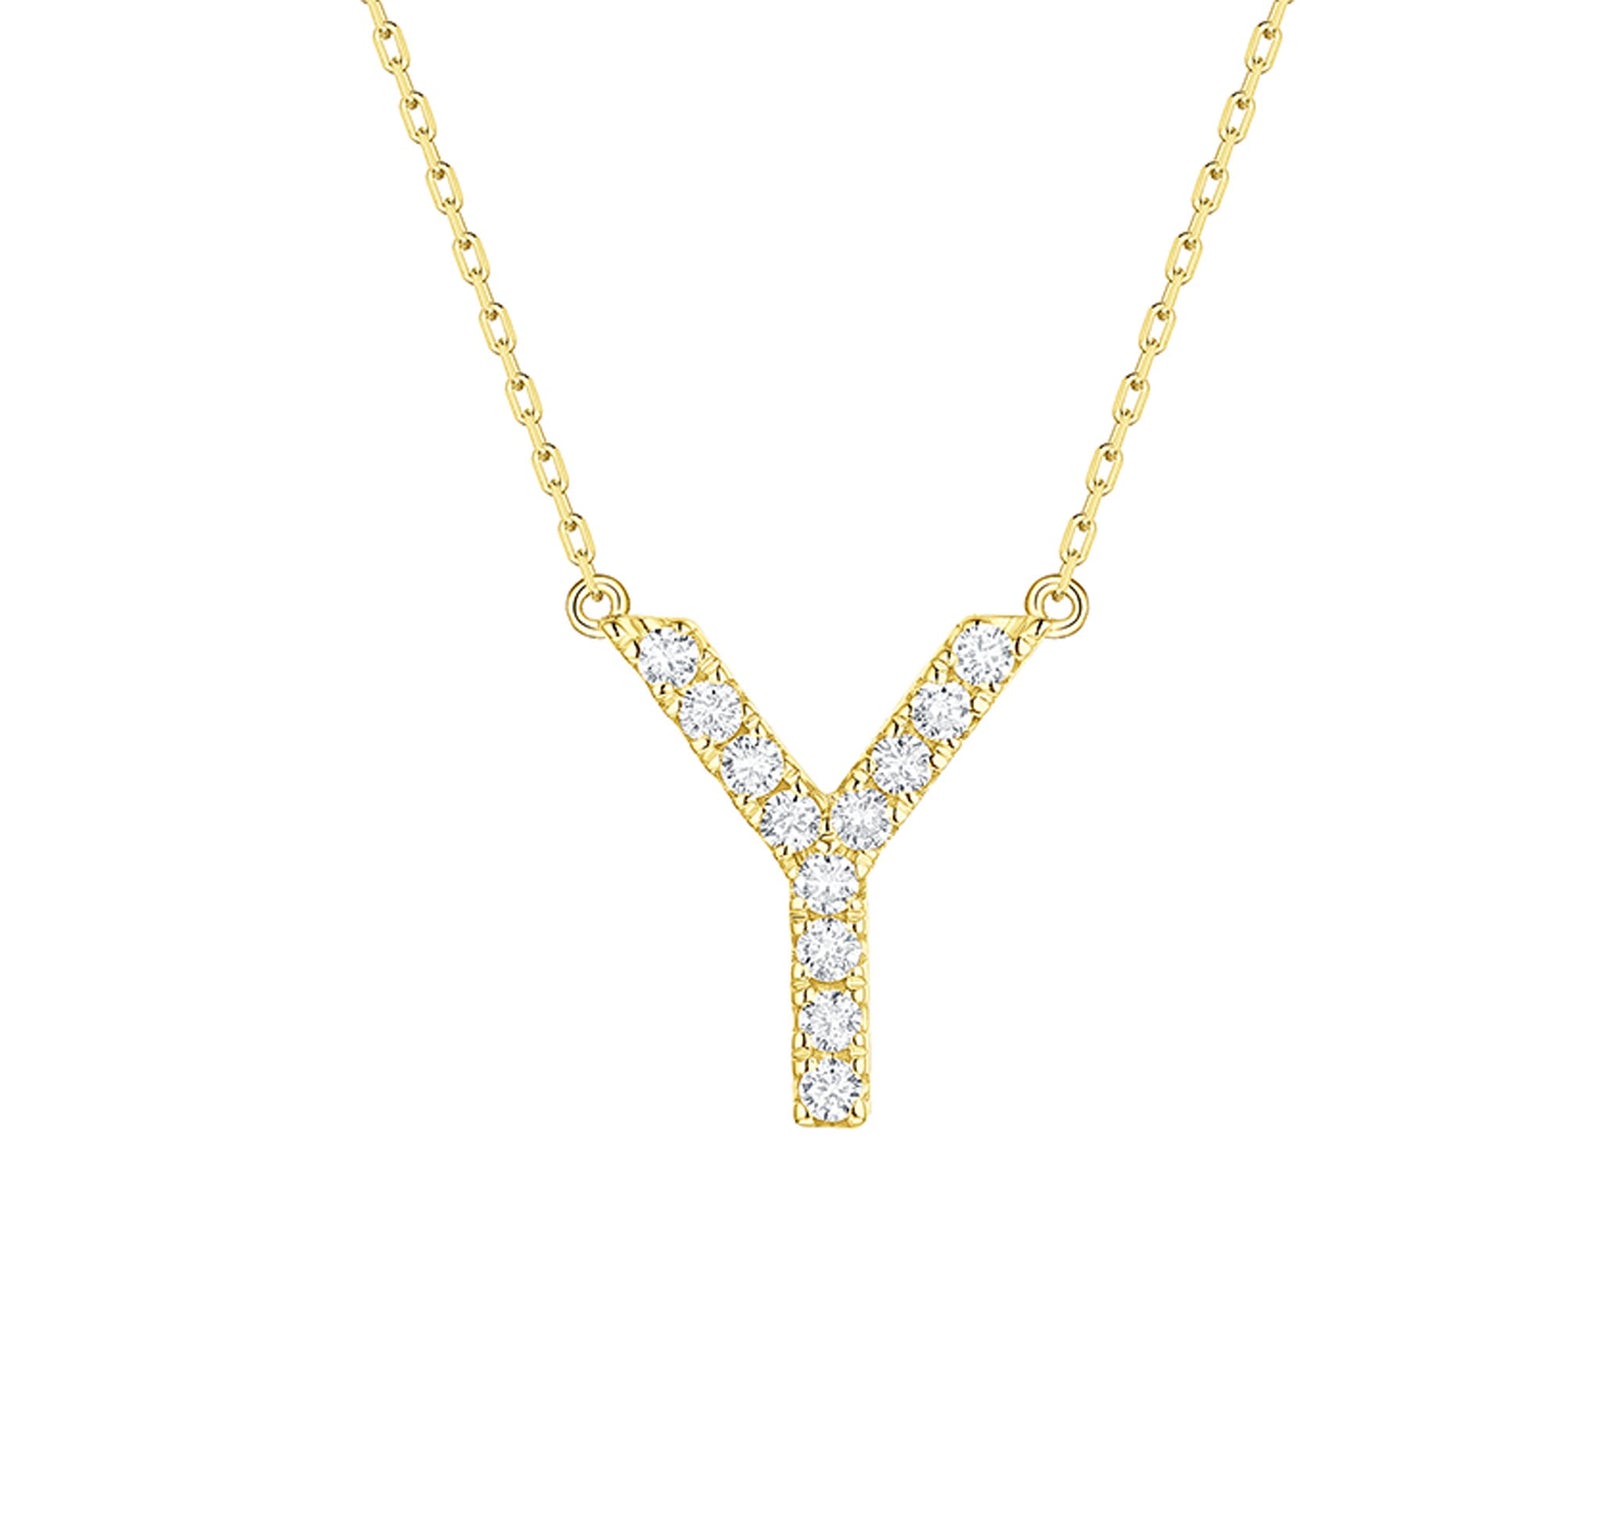 My Type 0.17ct "Y" Lab Grown Diamond Necklace NL-00170WHT